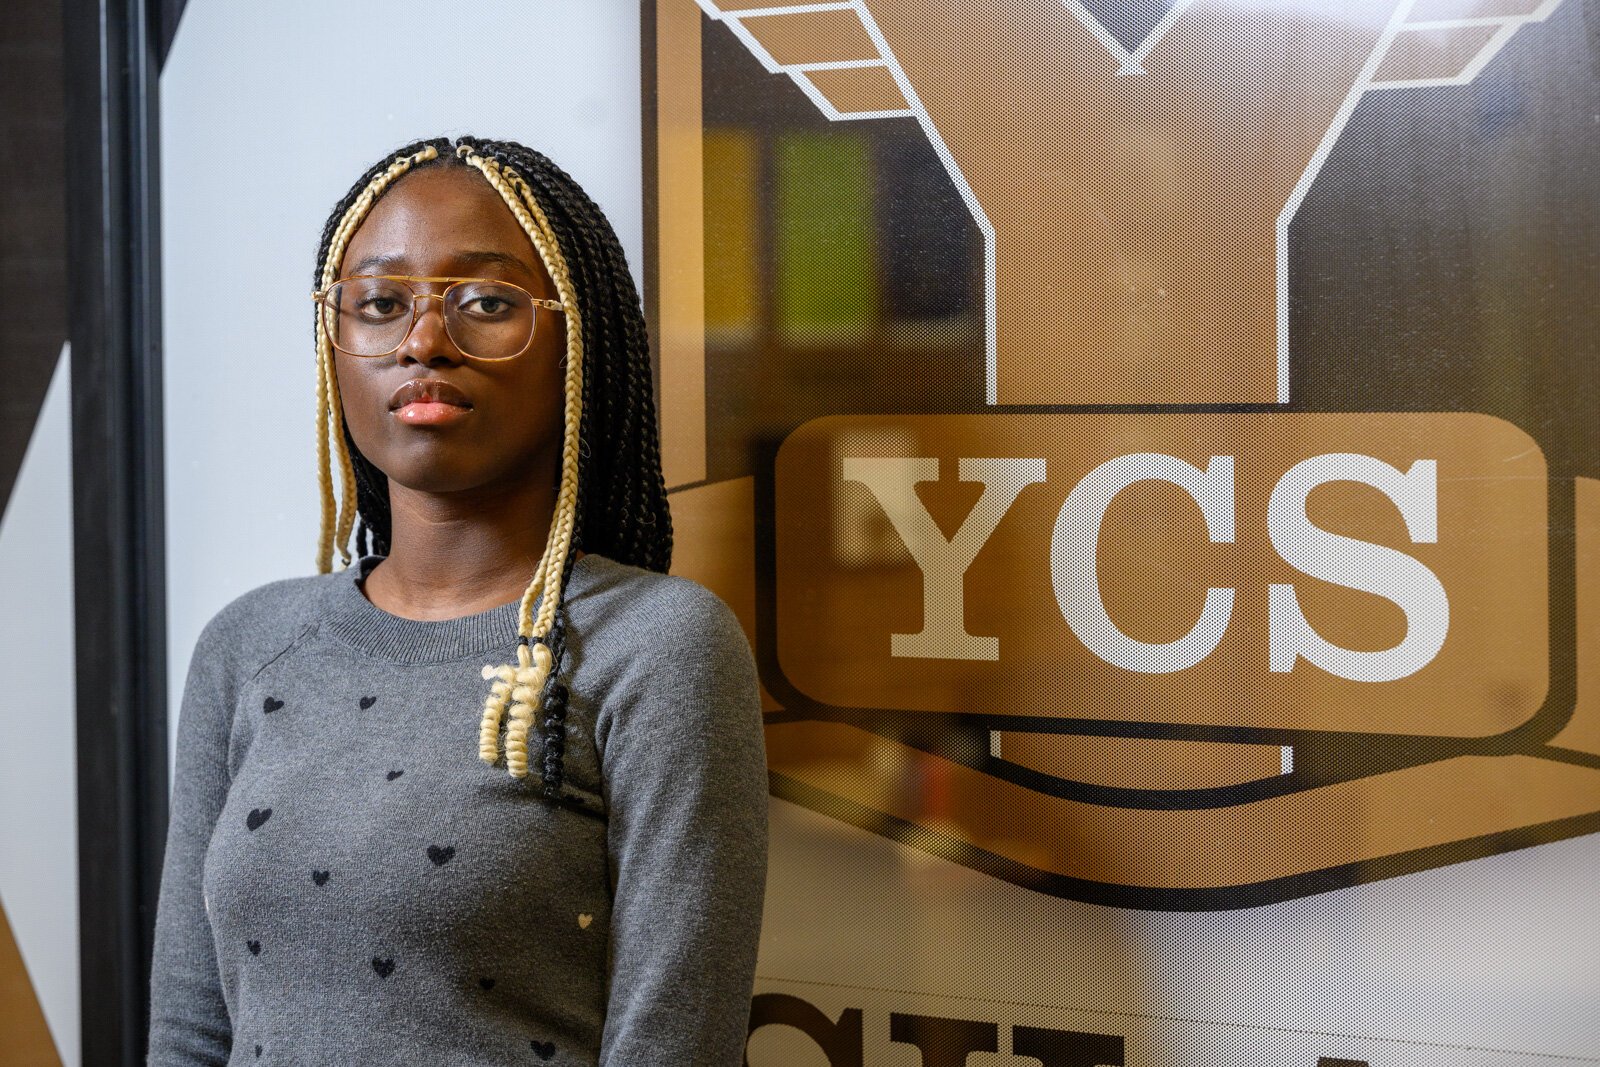 Ypsilanti Community High School promotes mental health among its students